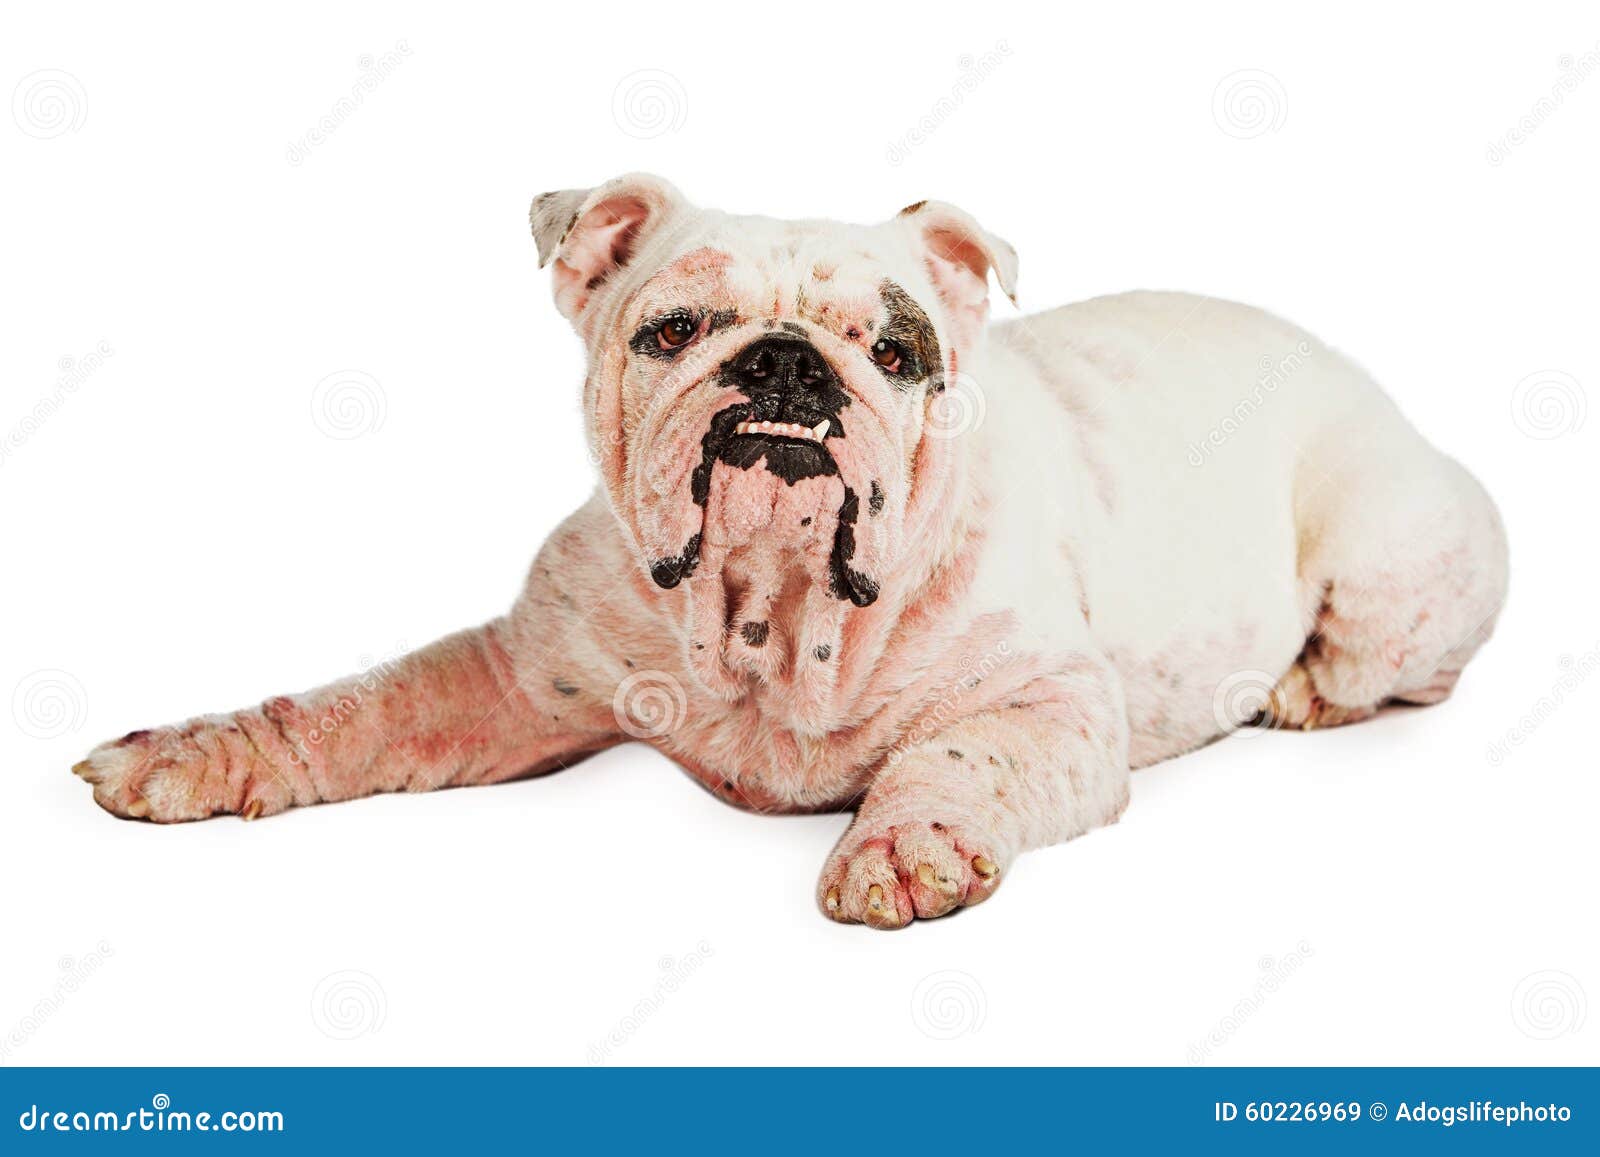 Bulldog With Skin Rash From Mange Royalty Free Stock Image